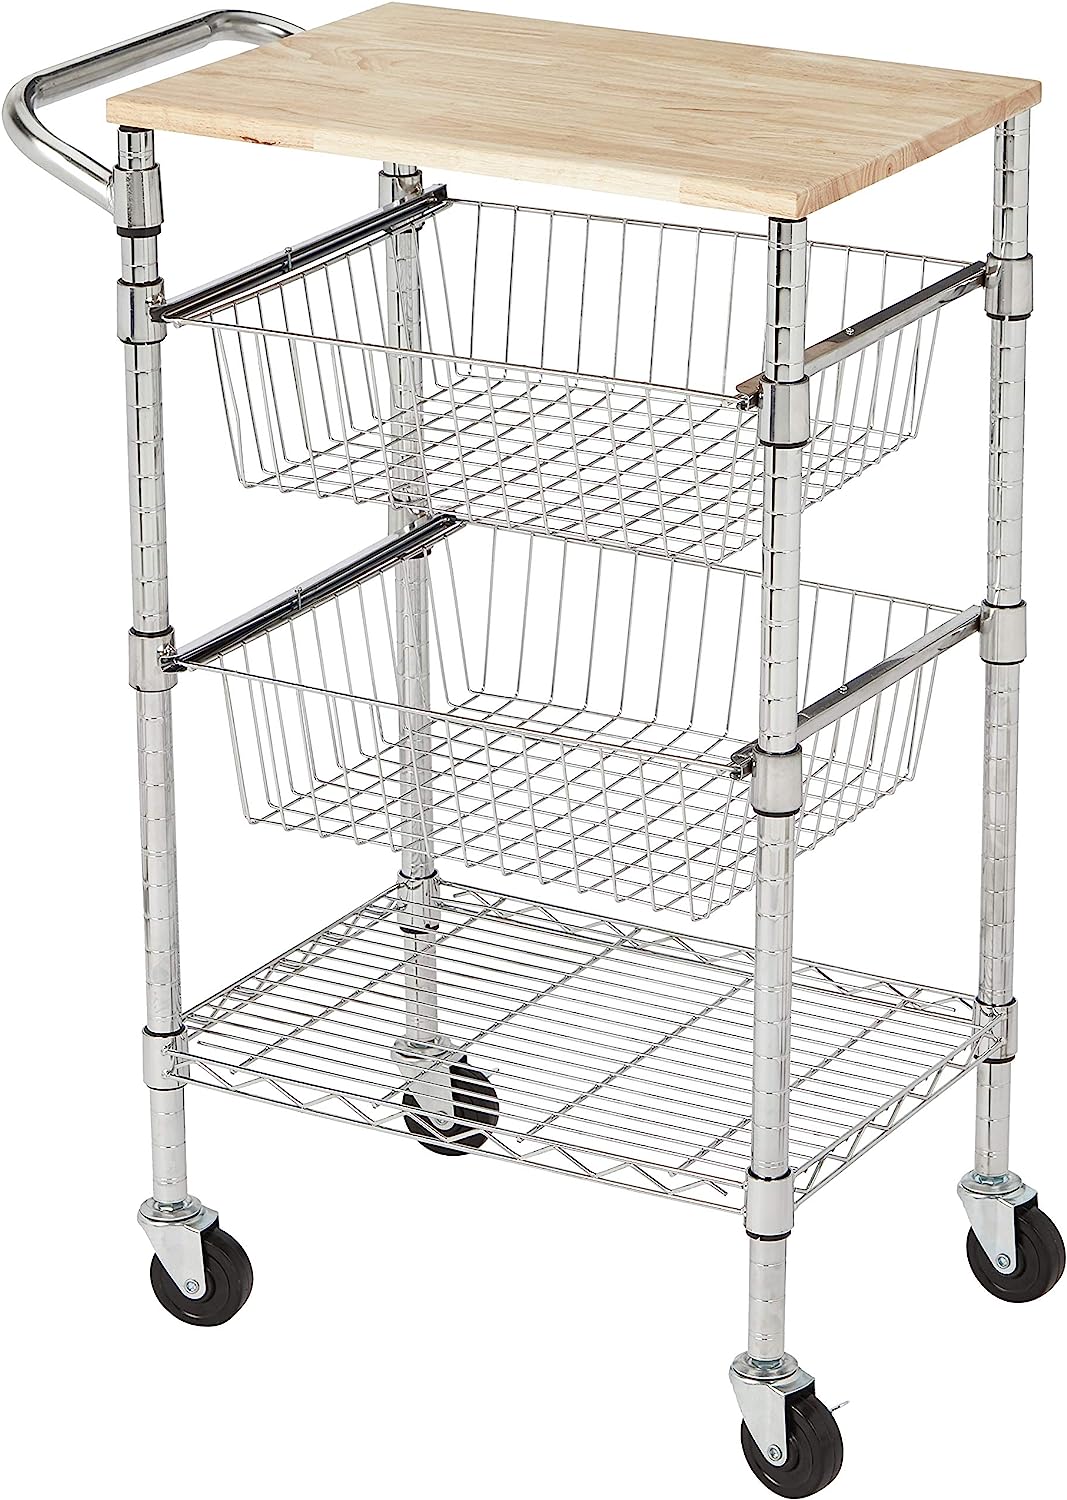 Amazon Basics 3-Tier Metal Basket Rolling Cart with [...]